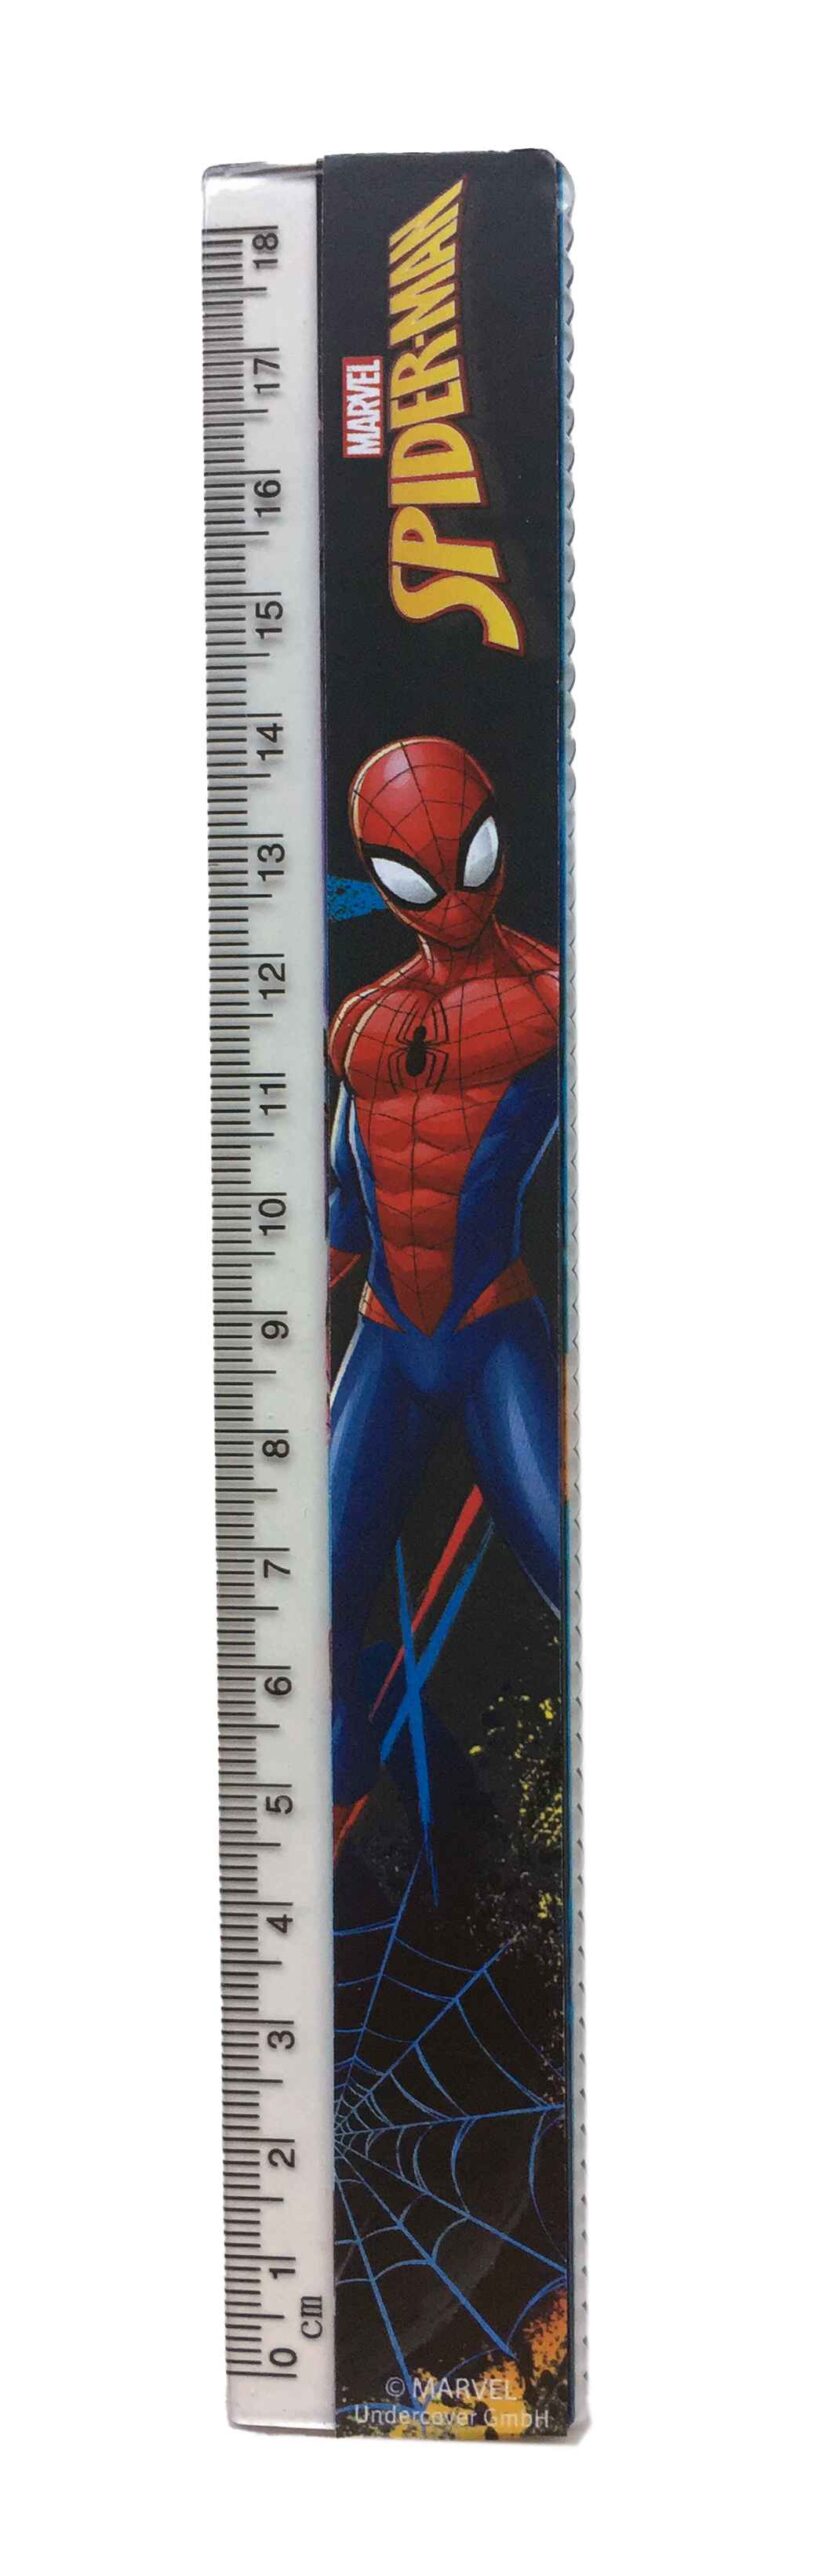 Gim Σετ Δώρου Μολυβοθήκη Spiderman 337-04884 - Gim